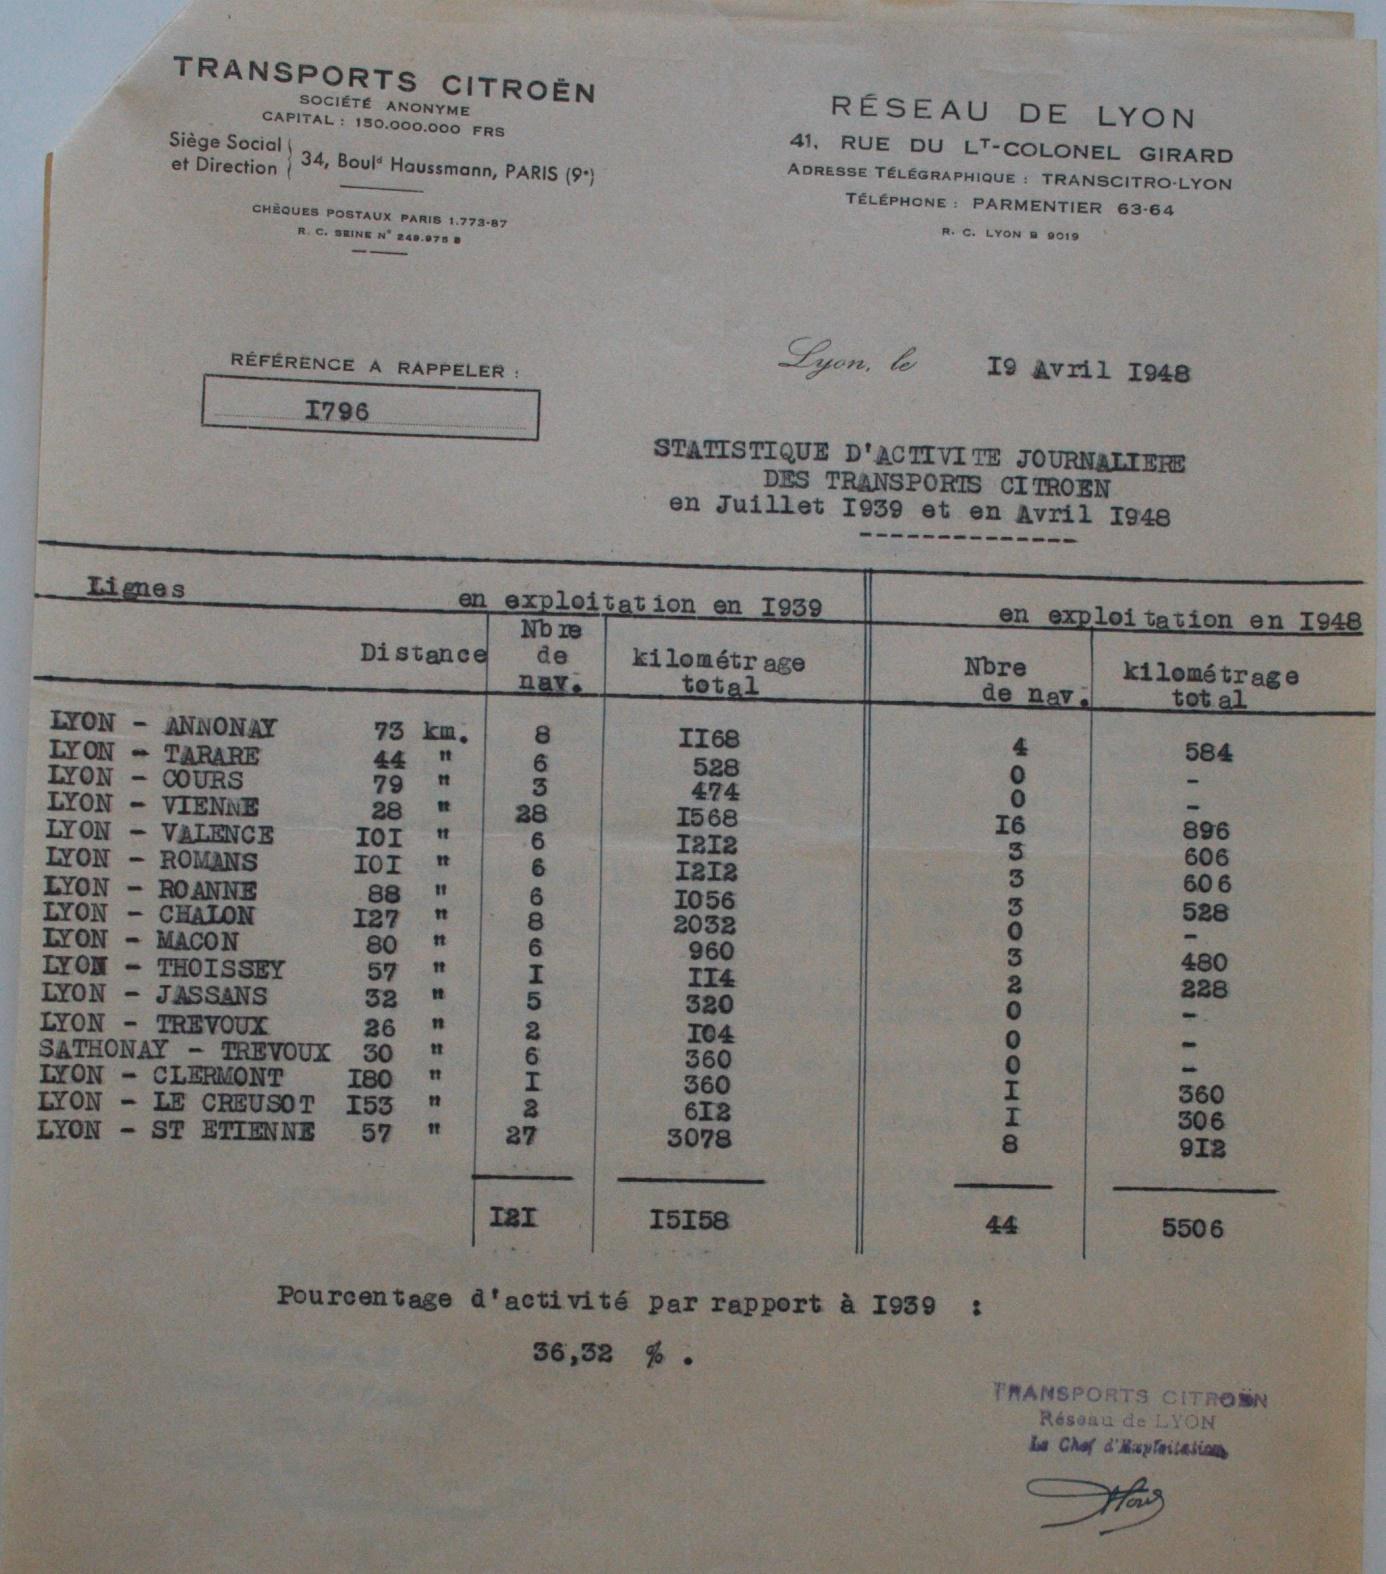 1948 statistics